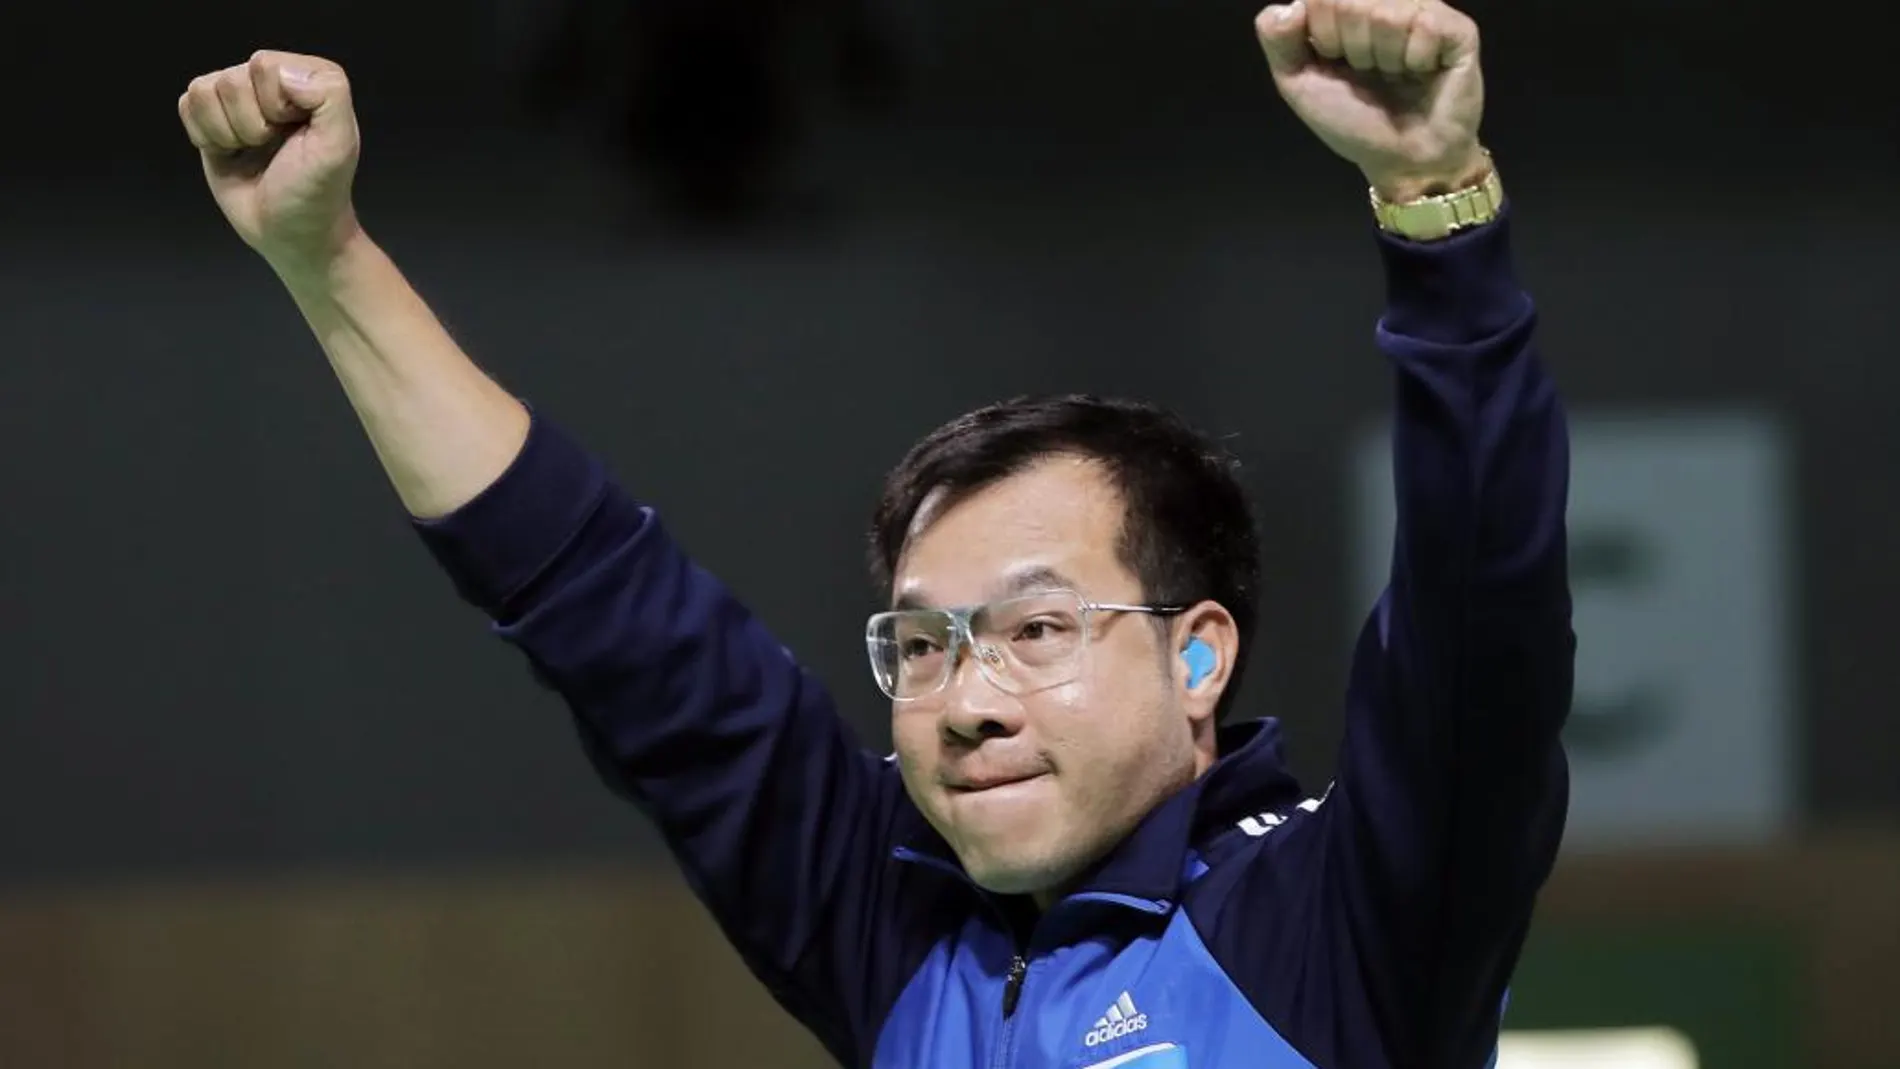 El tirador de Vietnam, Hoang Xuan Vinh, celebra la medalla de oro